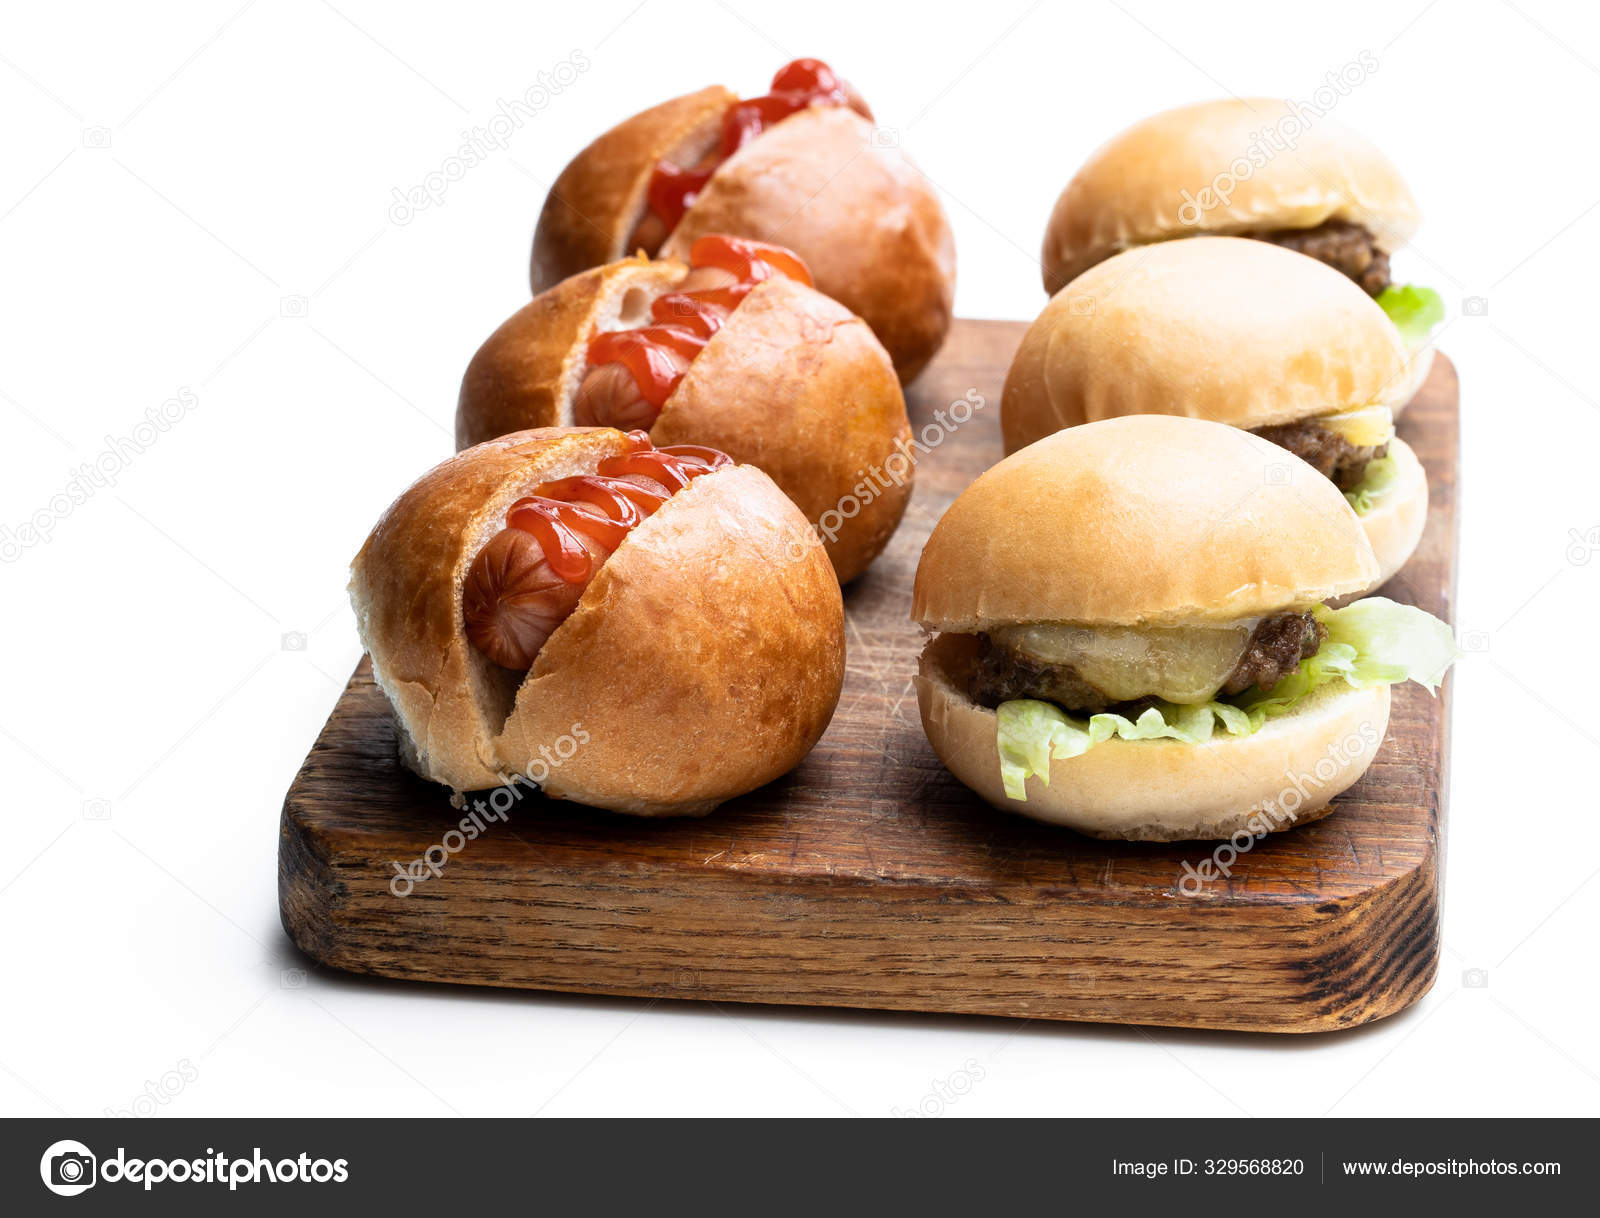 Set of three hamburgers and hotdogs on white background Stock Photo by ©Lena_Zajchikova 329568820